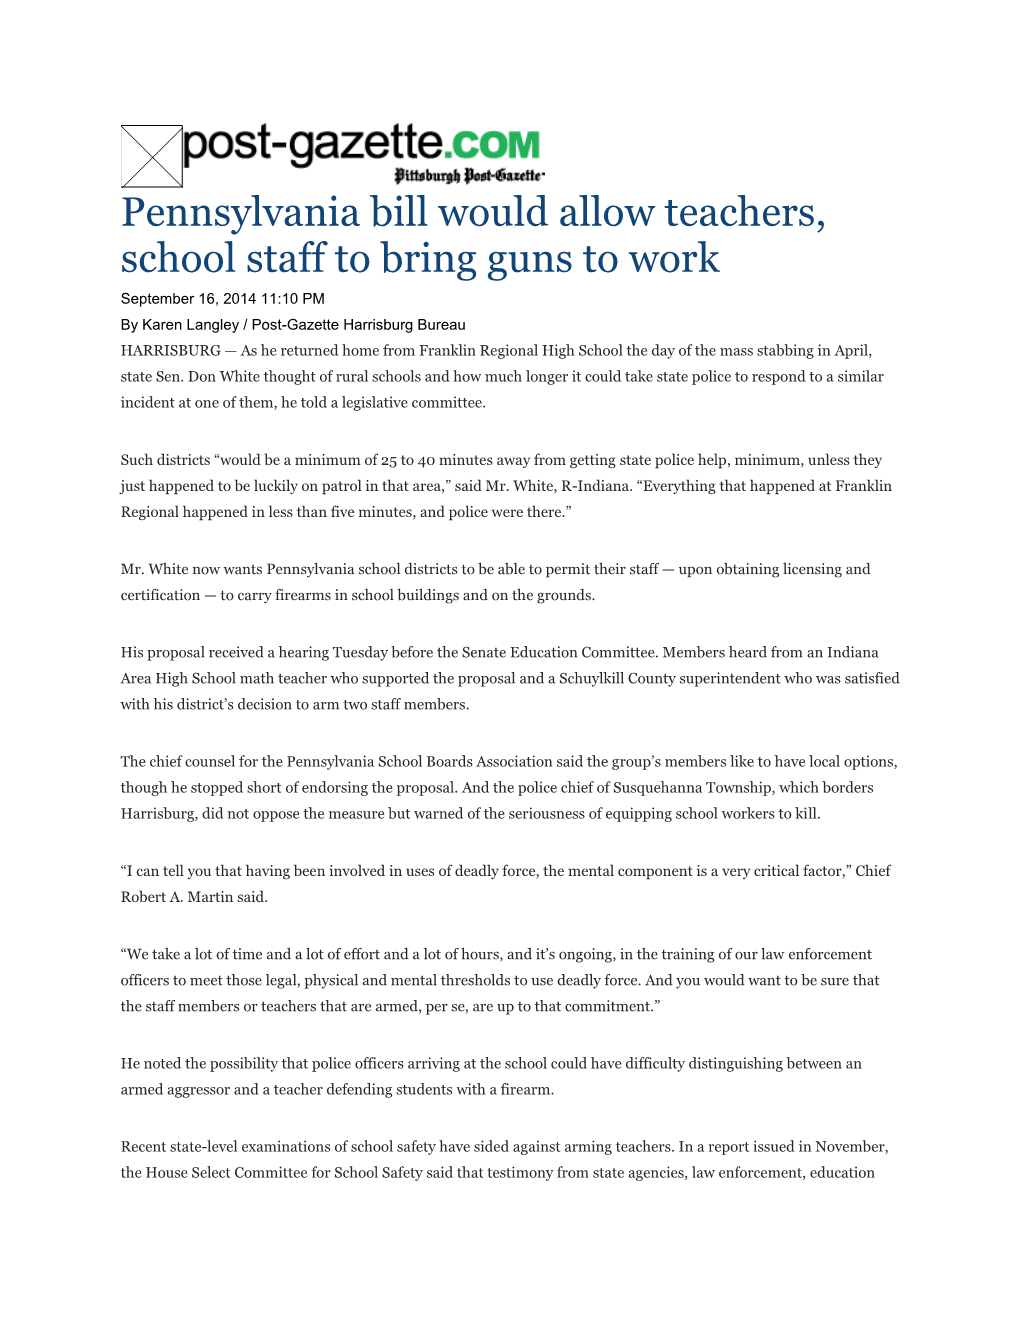 Pennsylvania Bill Would Allow Teachers, School Staff to Bring Guns